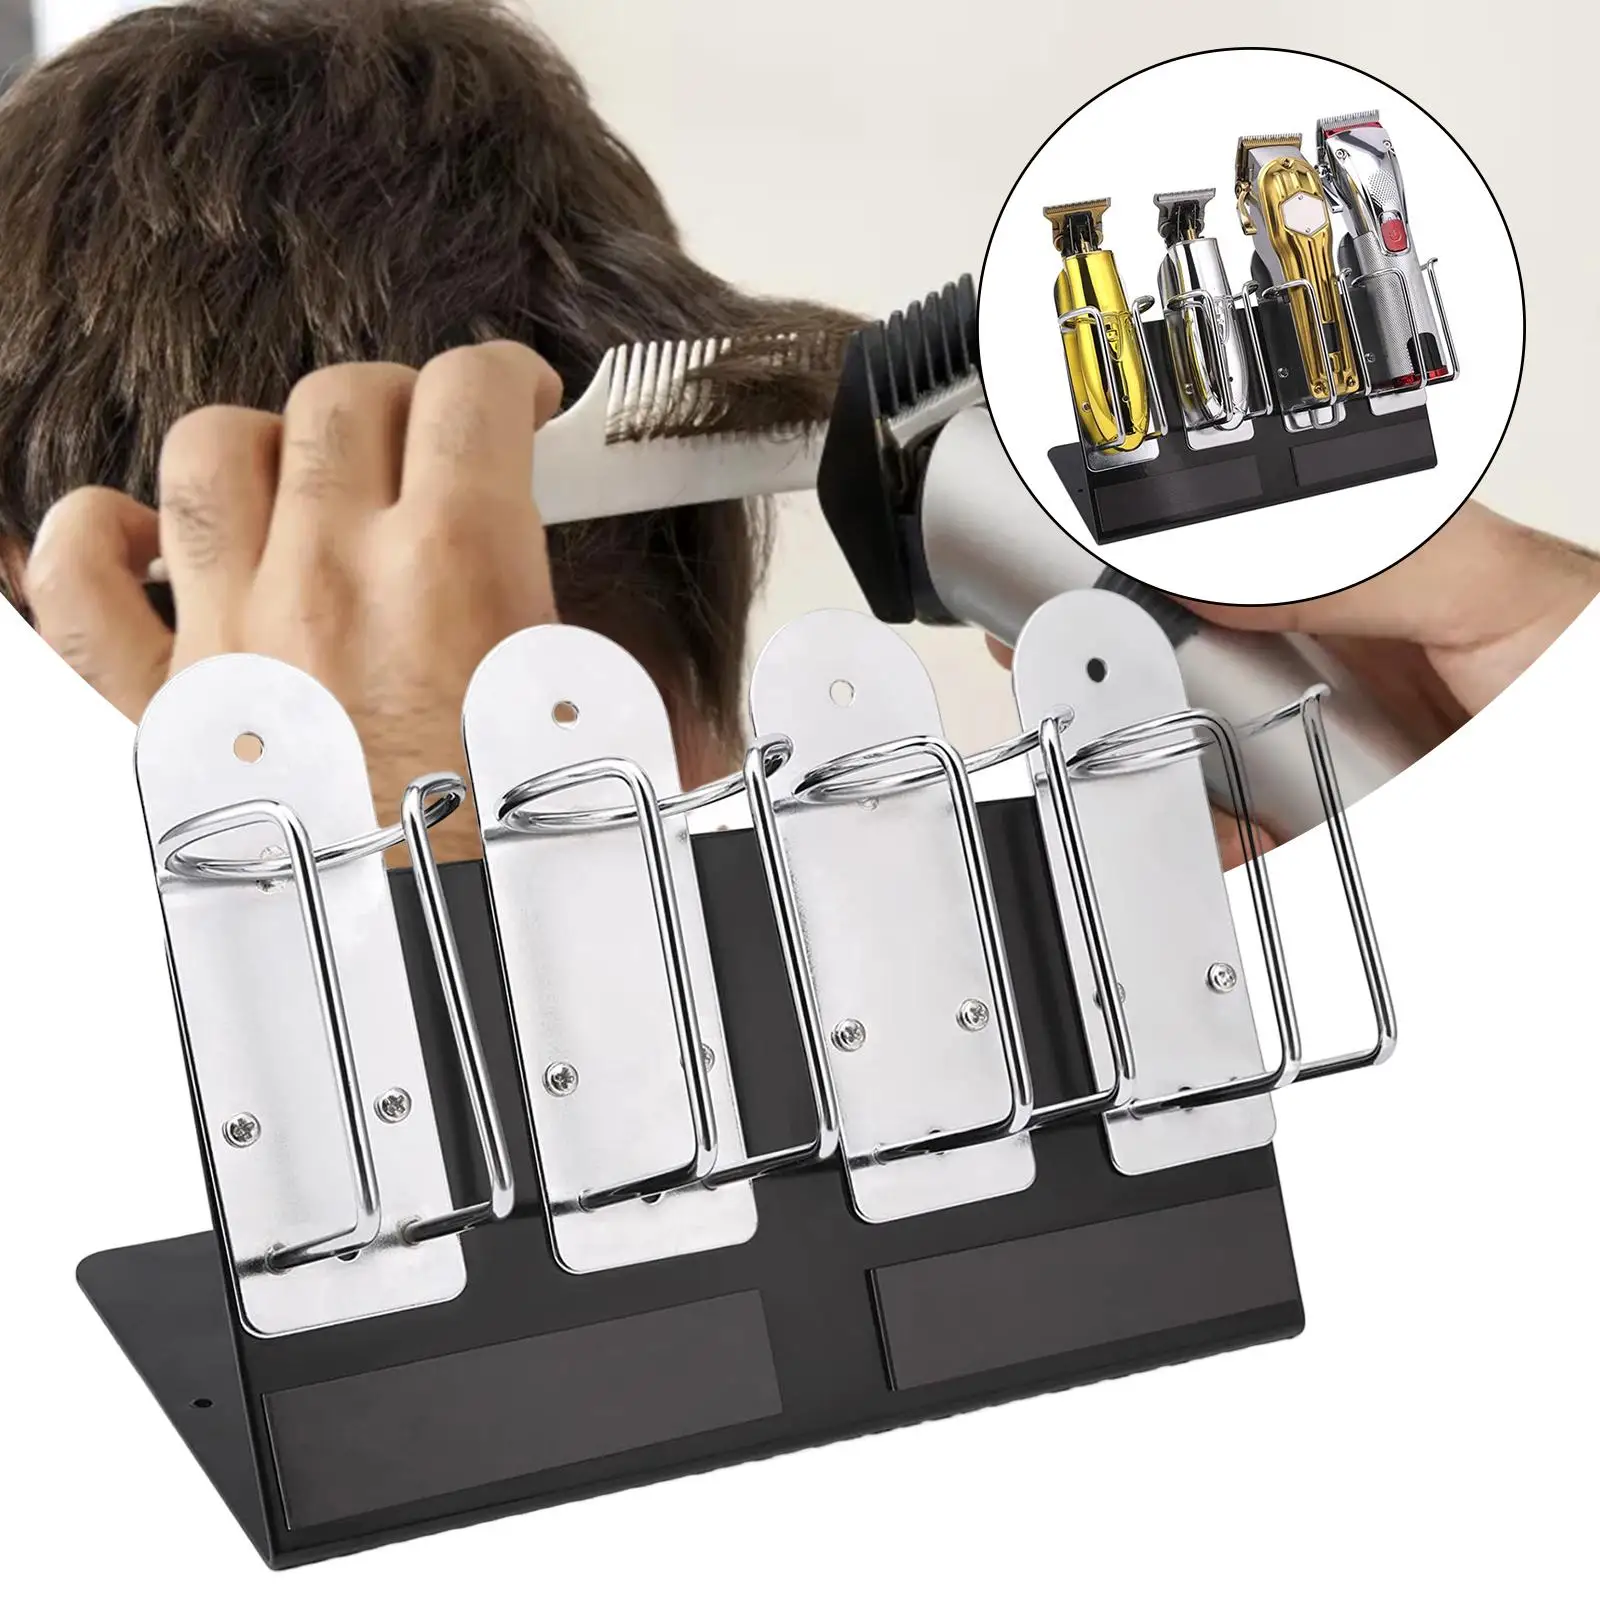 4 Slots Holder, Salon Accessories Beard Rack, Hairstylist Tools Storage Rack, for Salon Hairdresser Barbers Hairstylist